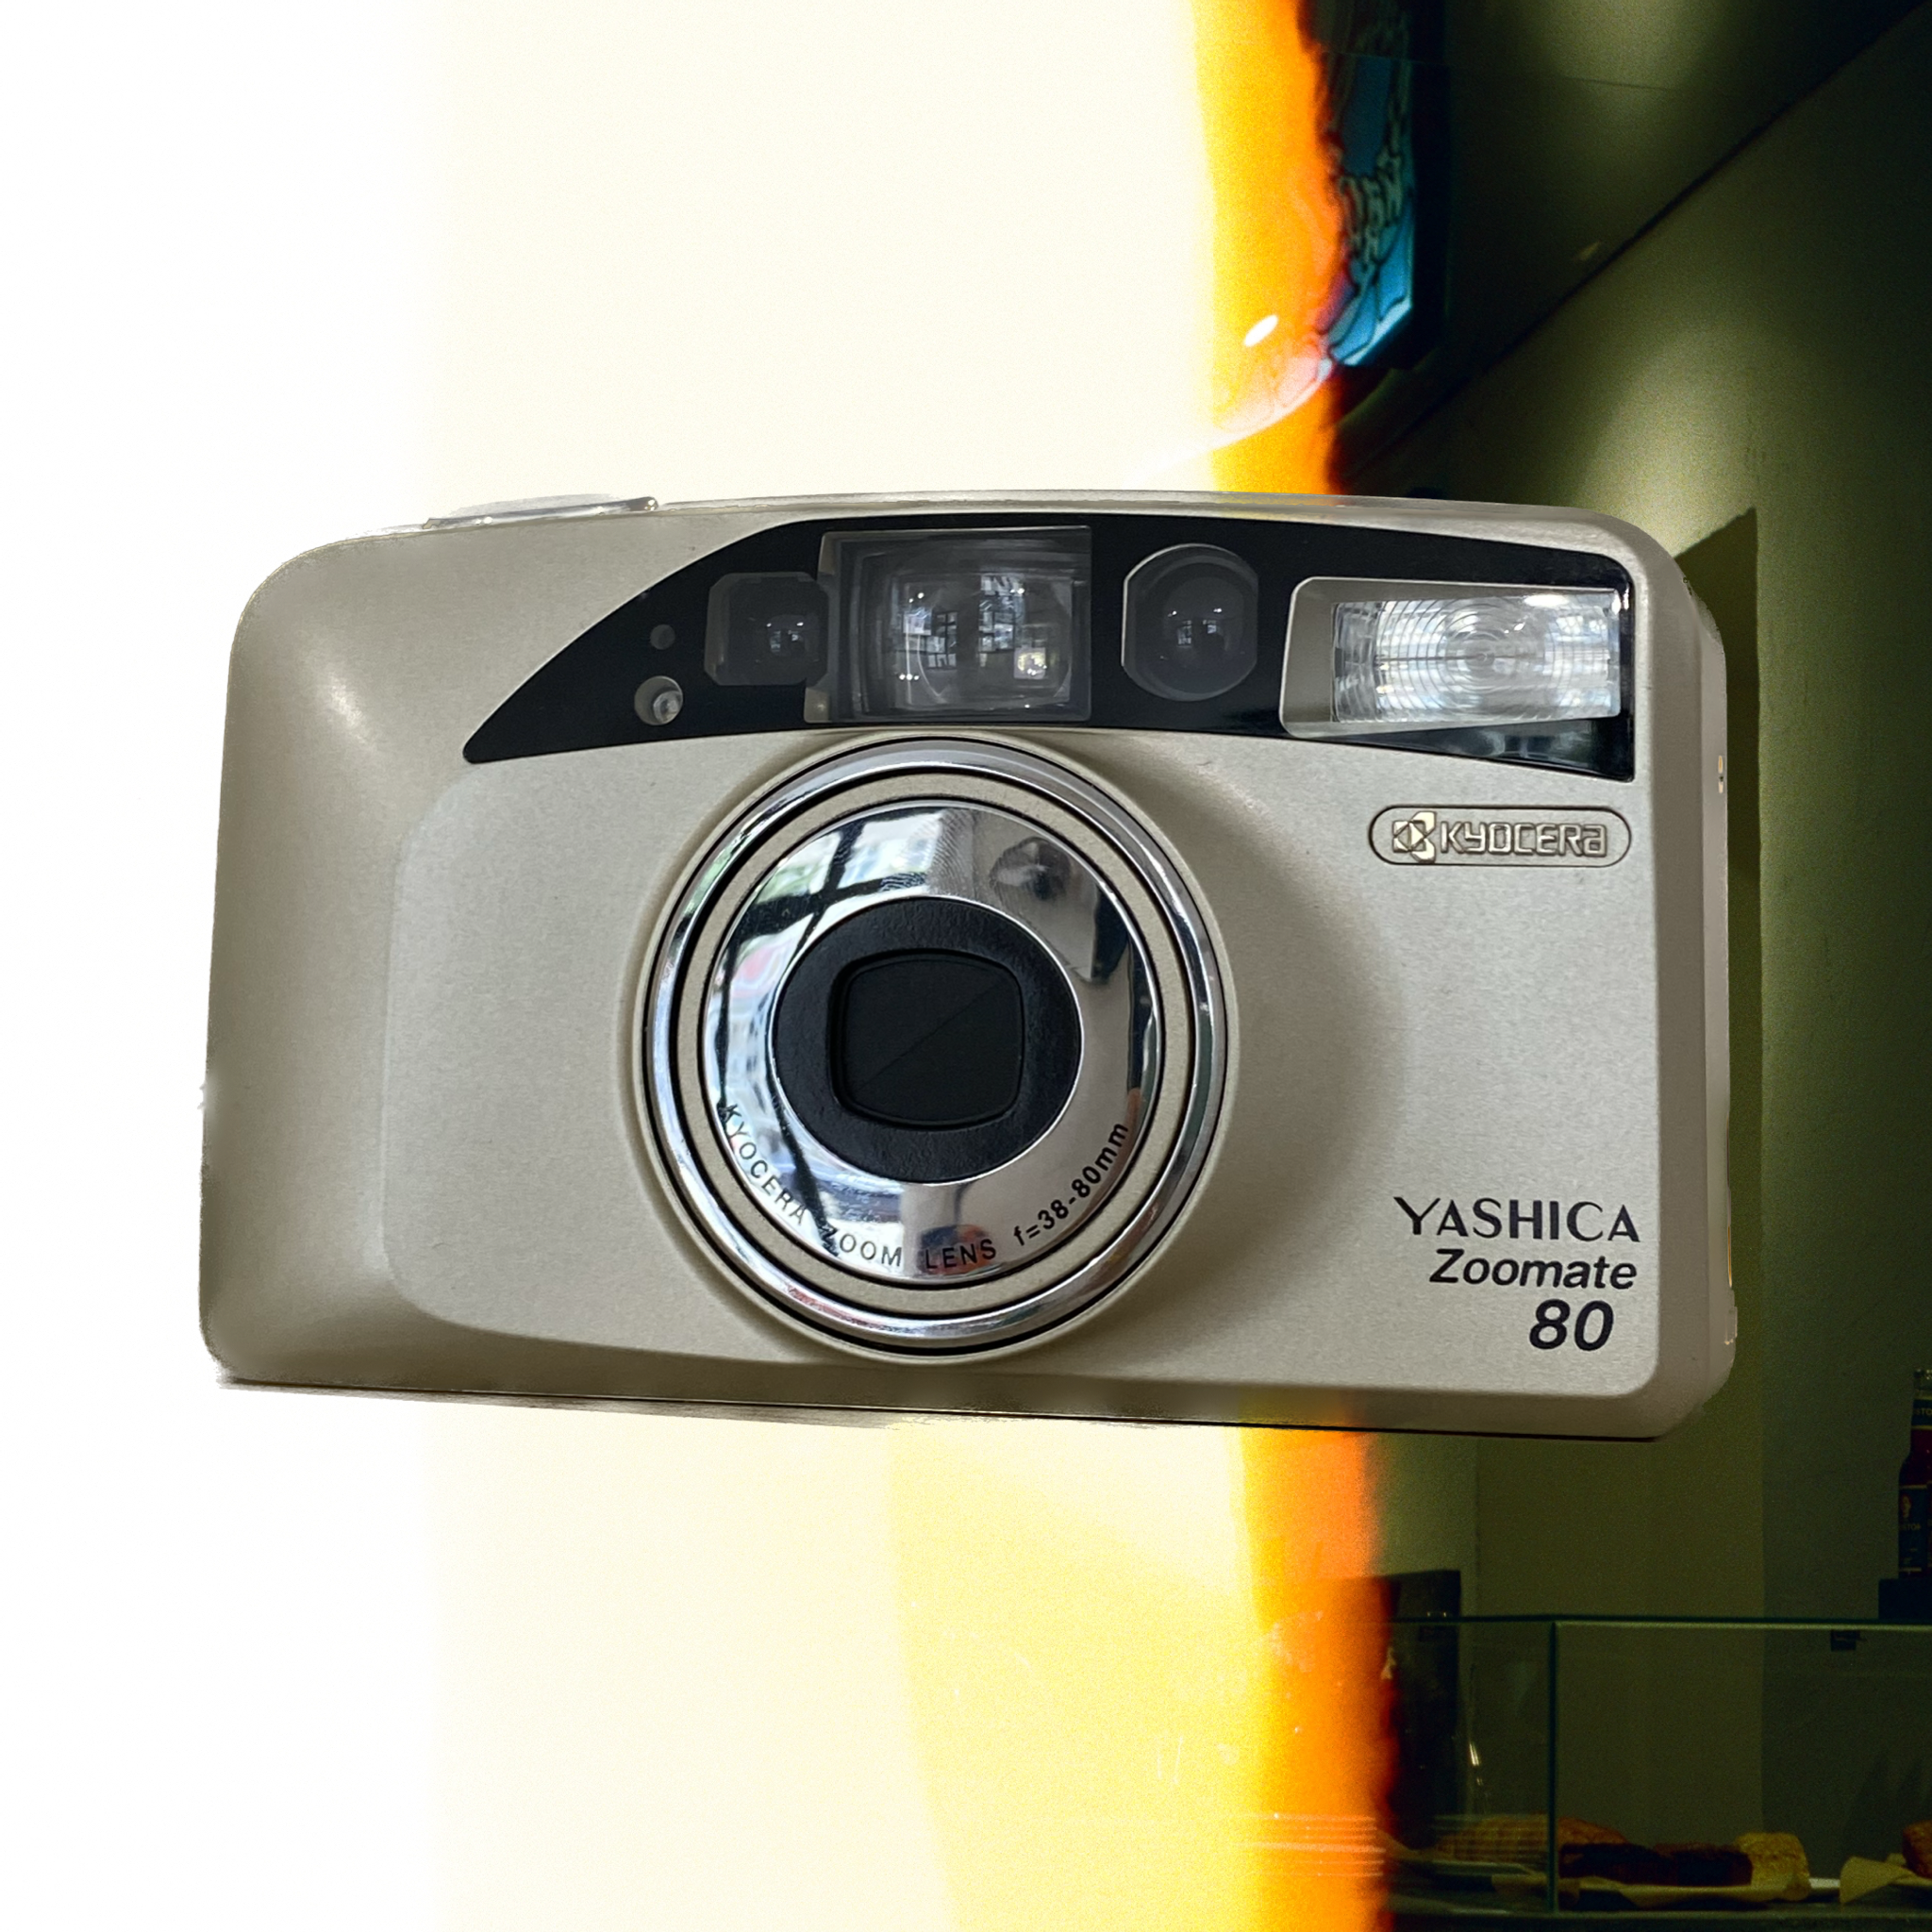 Yashica zoommate 80 | point&shoot used film camera